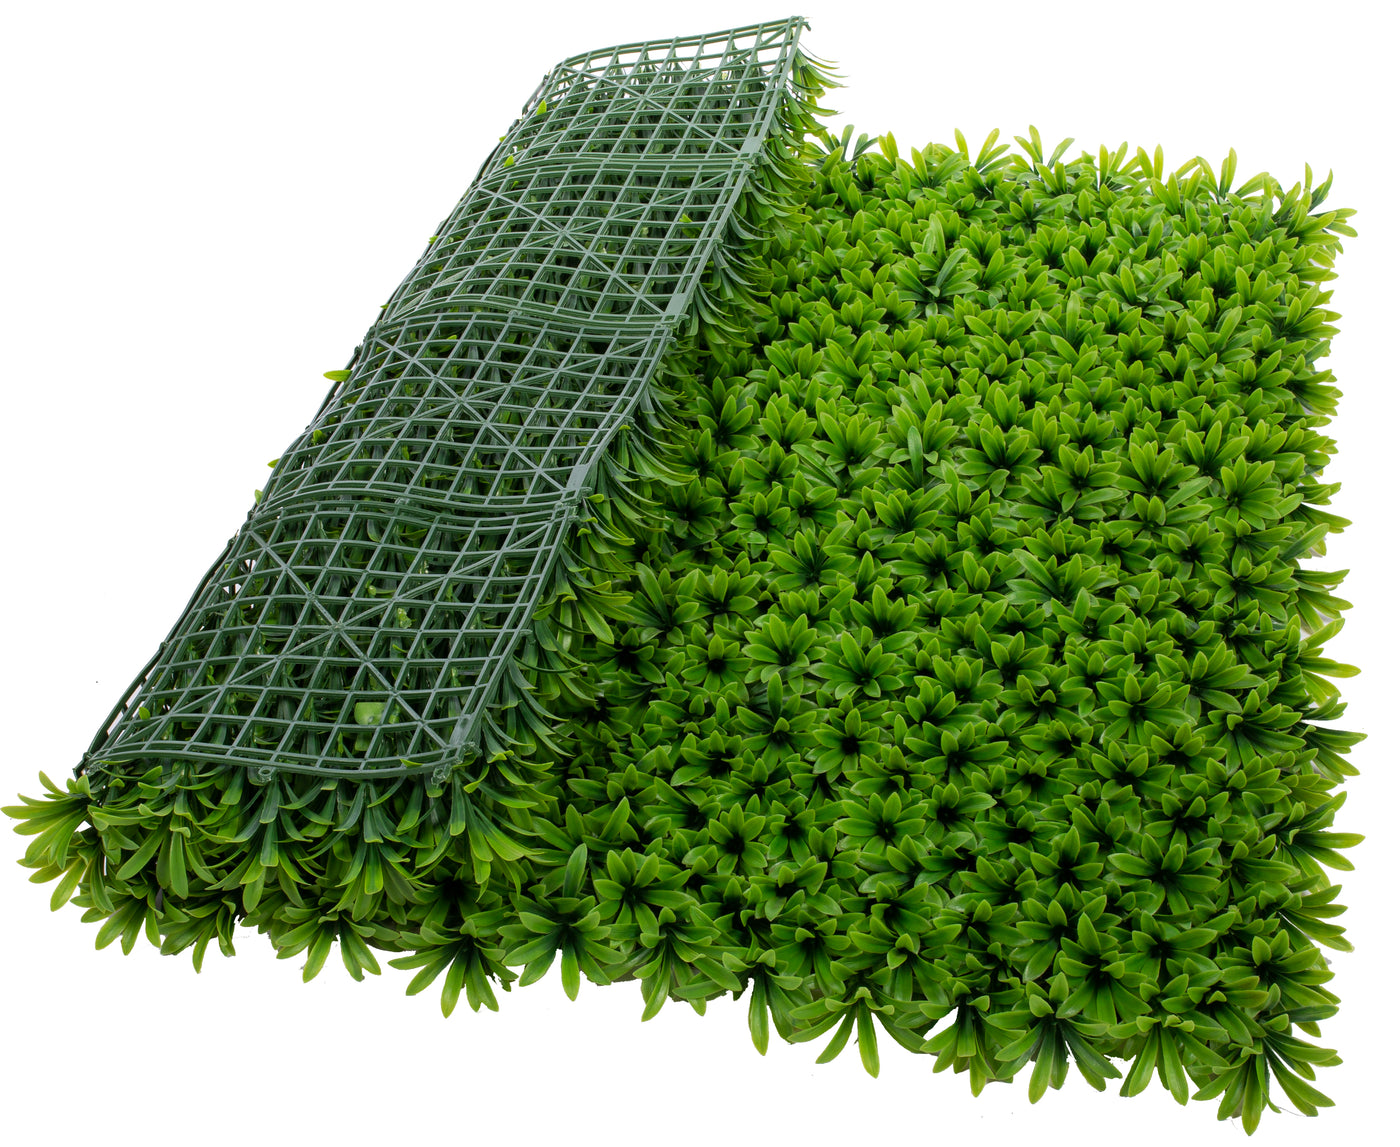 Gradina verticala din plante artificiale 1mp (100x100cm) model V53 pentru interior si exterior